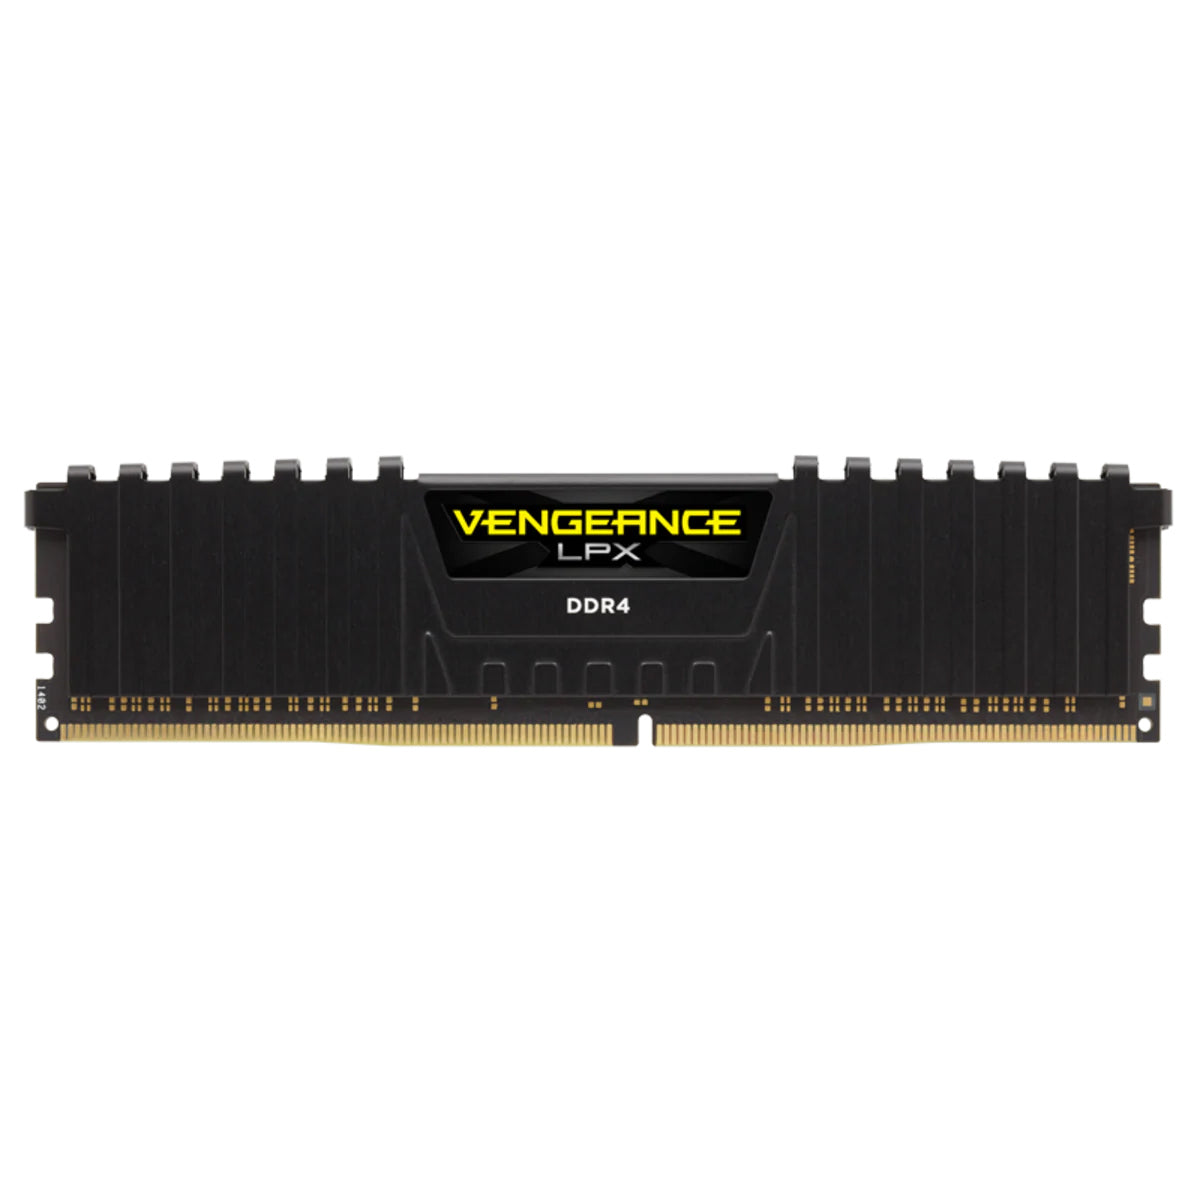 Corsair Vengeance LPX RAM 8GB DDR4 RAM 3600MHz डेस्कटॉप मेमोरी